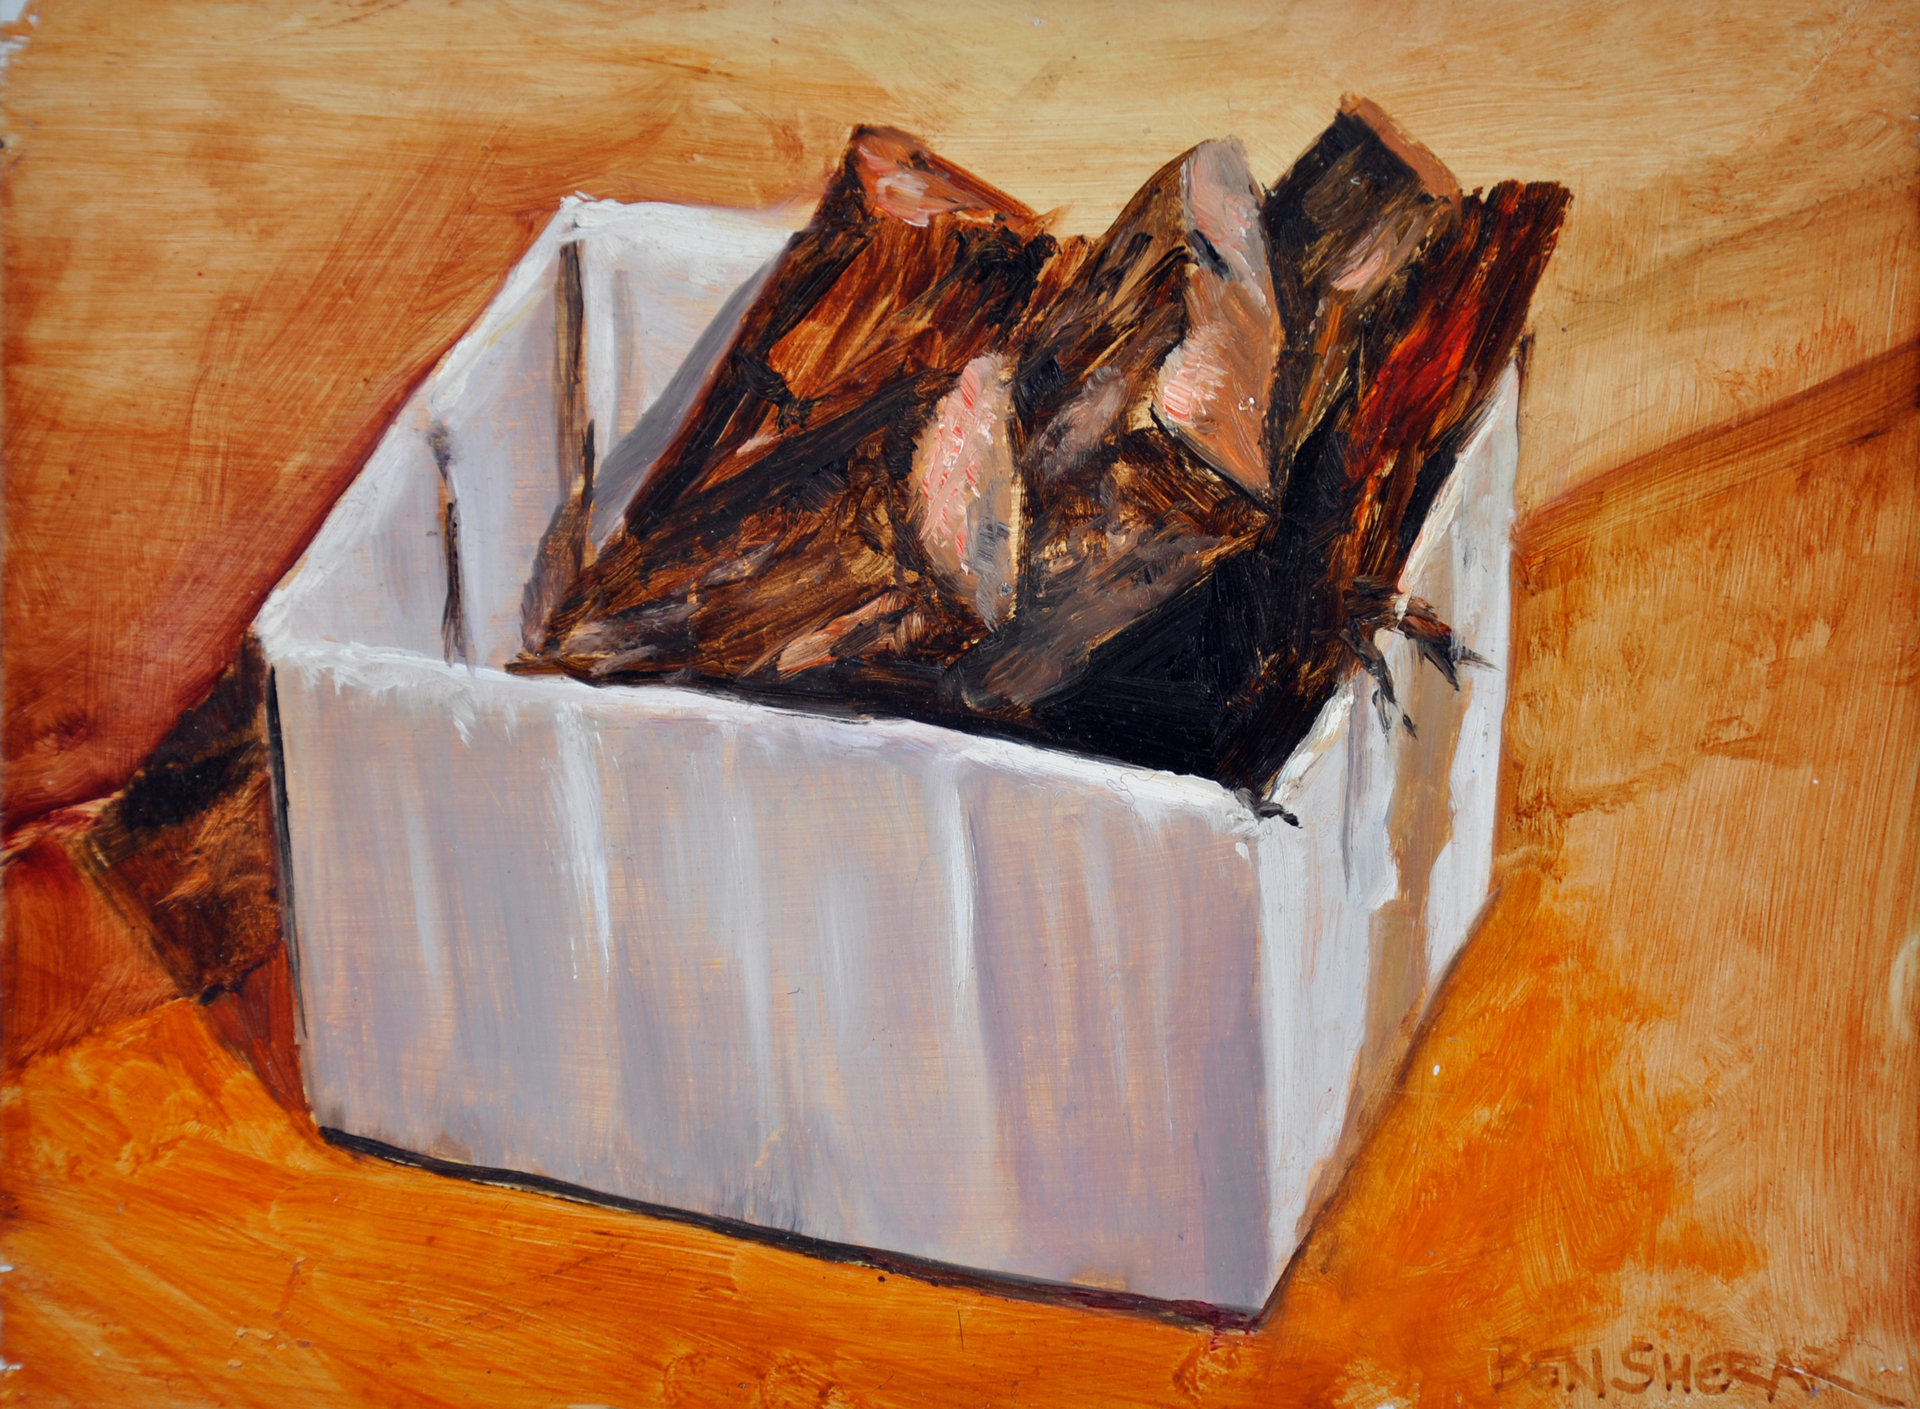 47. Ben Sherar, Wood Box 1 $310